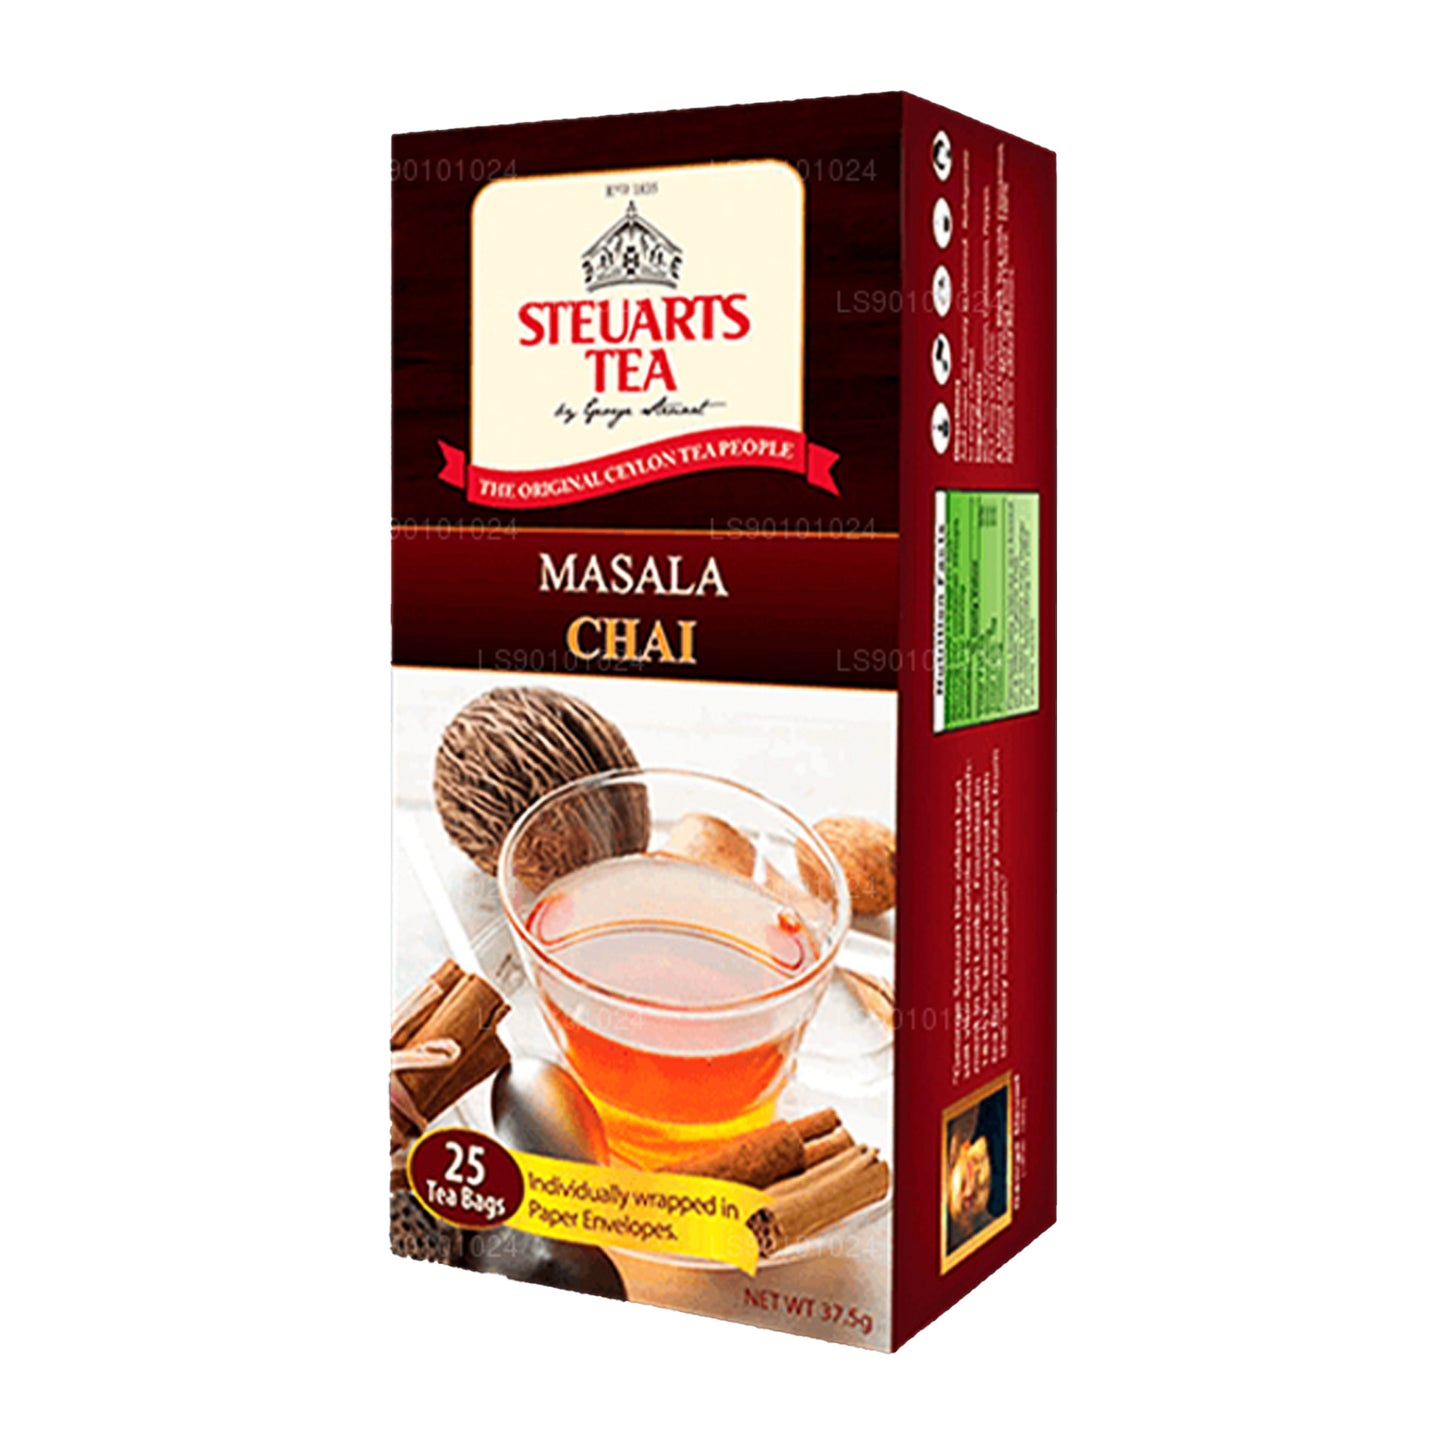 George Steuart Masala Chai Tea (50g) 25 Tea Bags